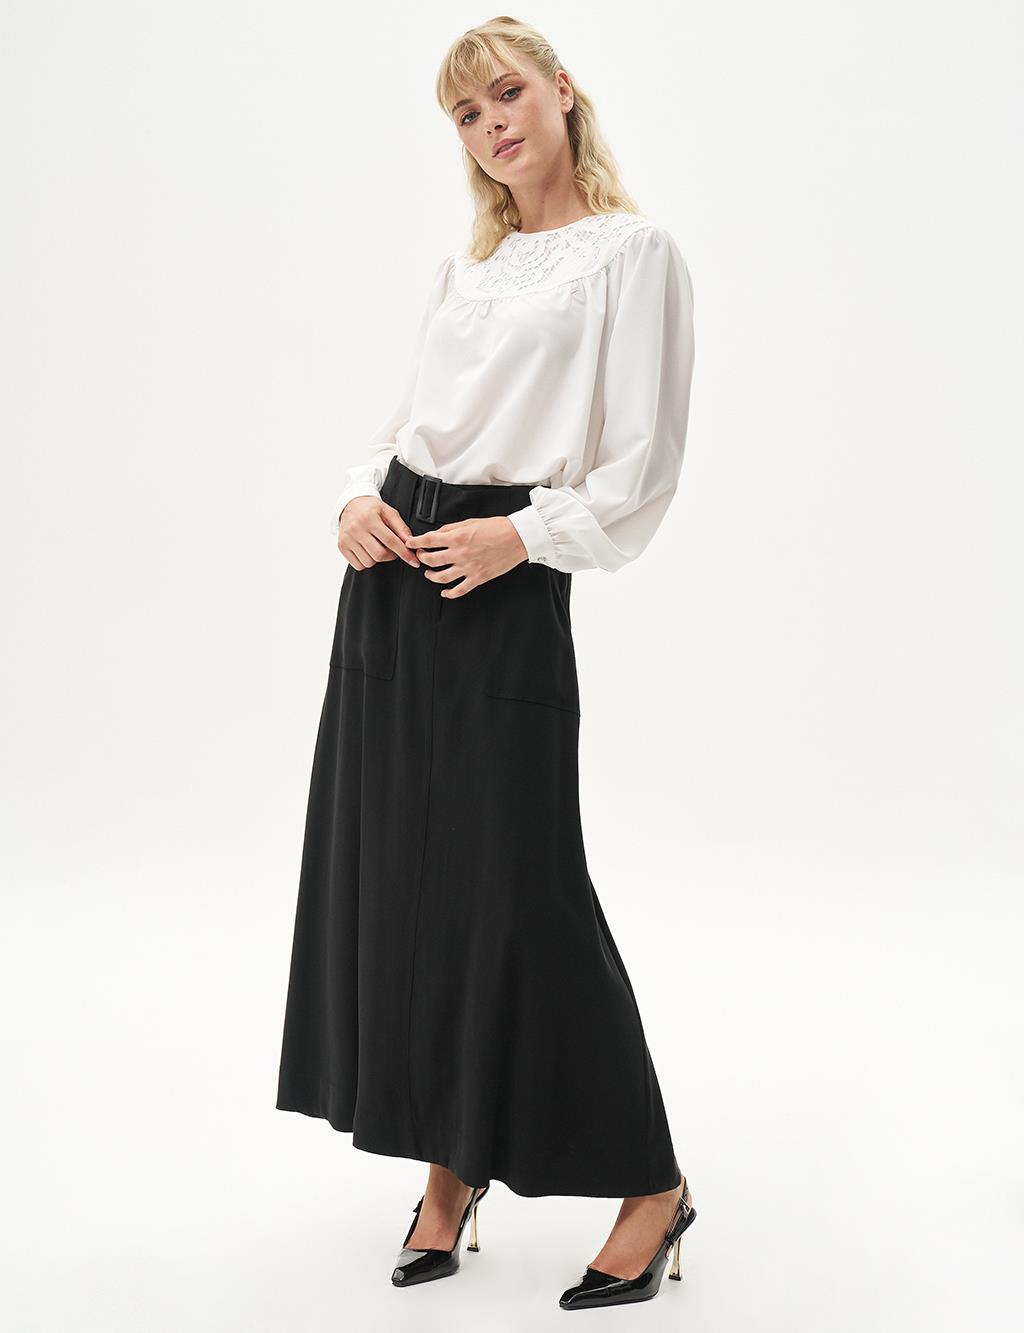 Bell Skirt with Pocket Detail in Black